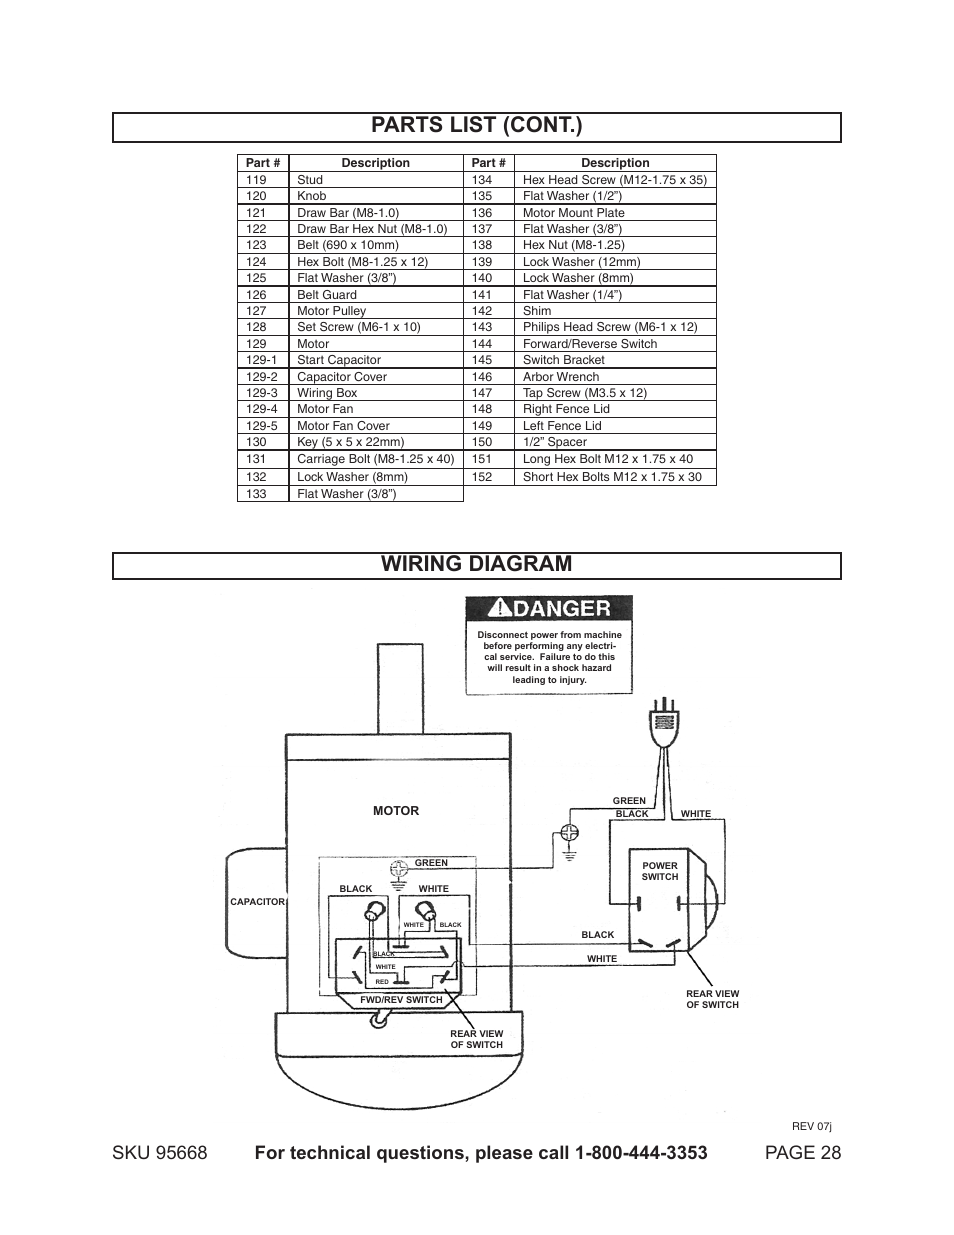 Parts List  Cont   Wiring Diagram